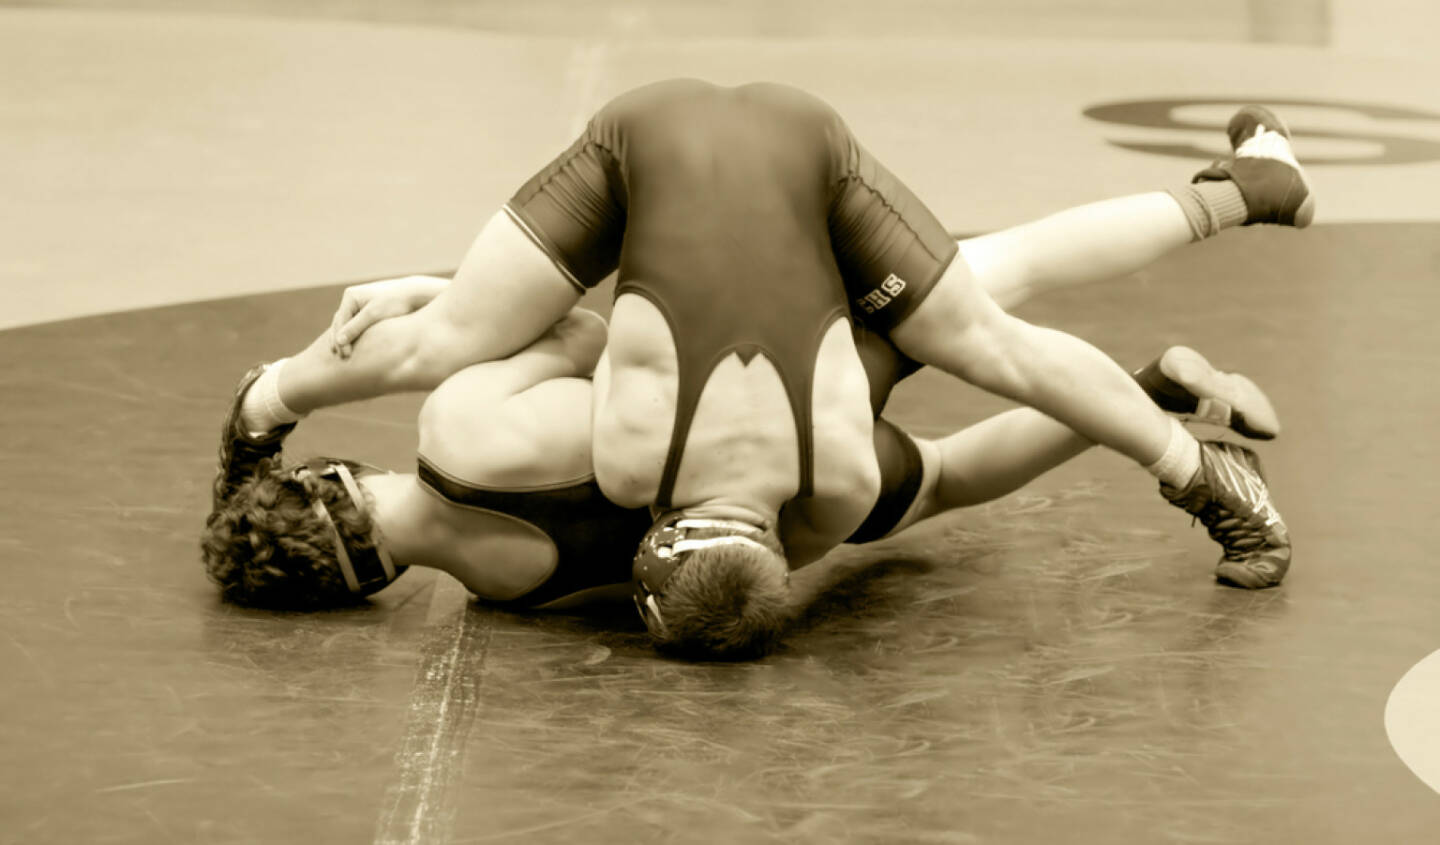 Ringkampf, ringen, Wettkampf, Kampf, http://www.shutterstock.com/de/pic-179203928/stock-photo-two-men-battle-for-control-in-wrestling-match.html 